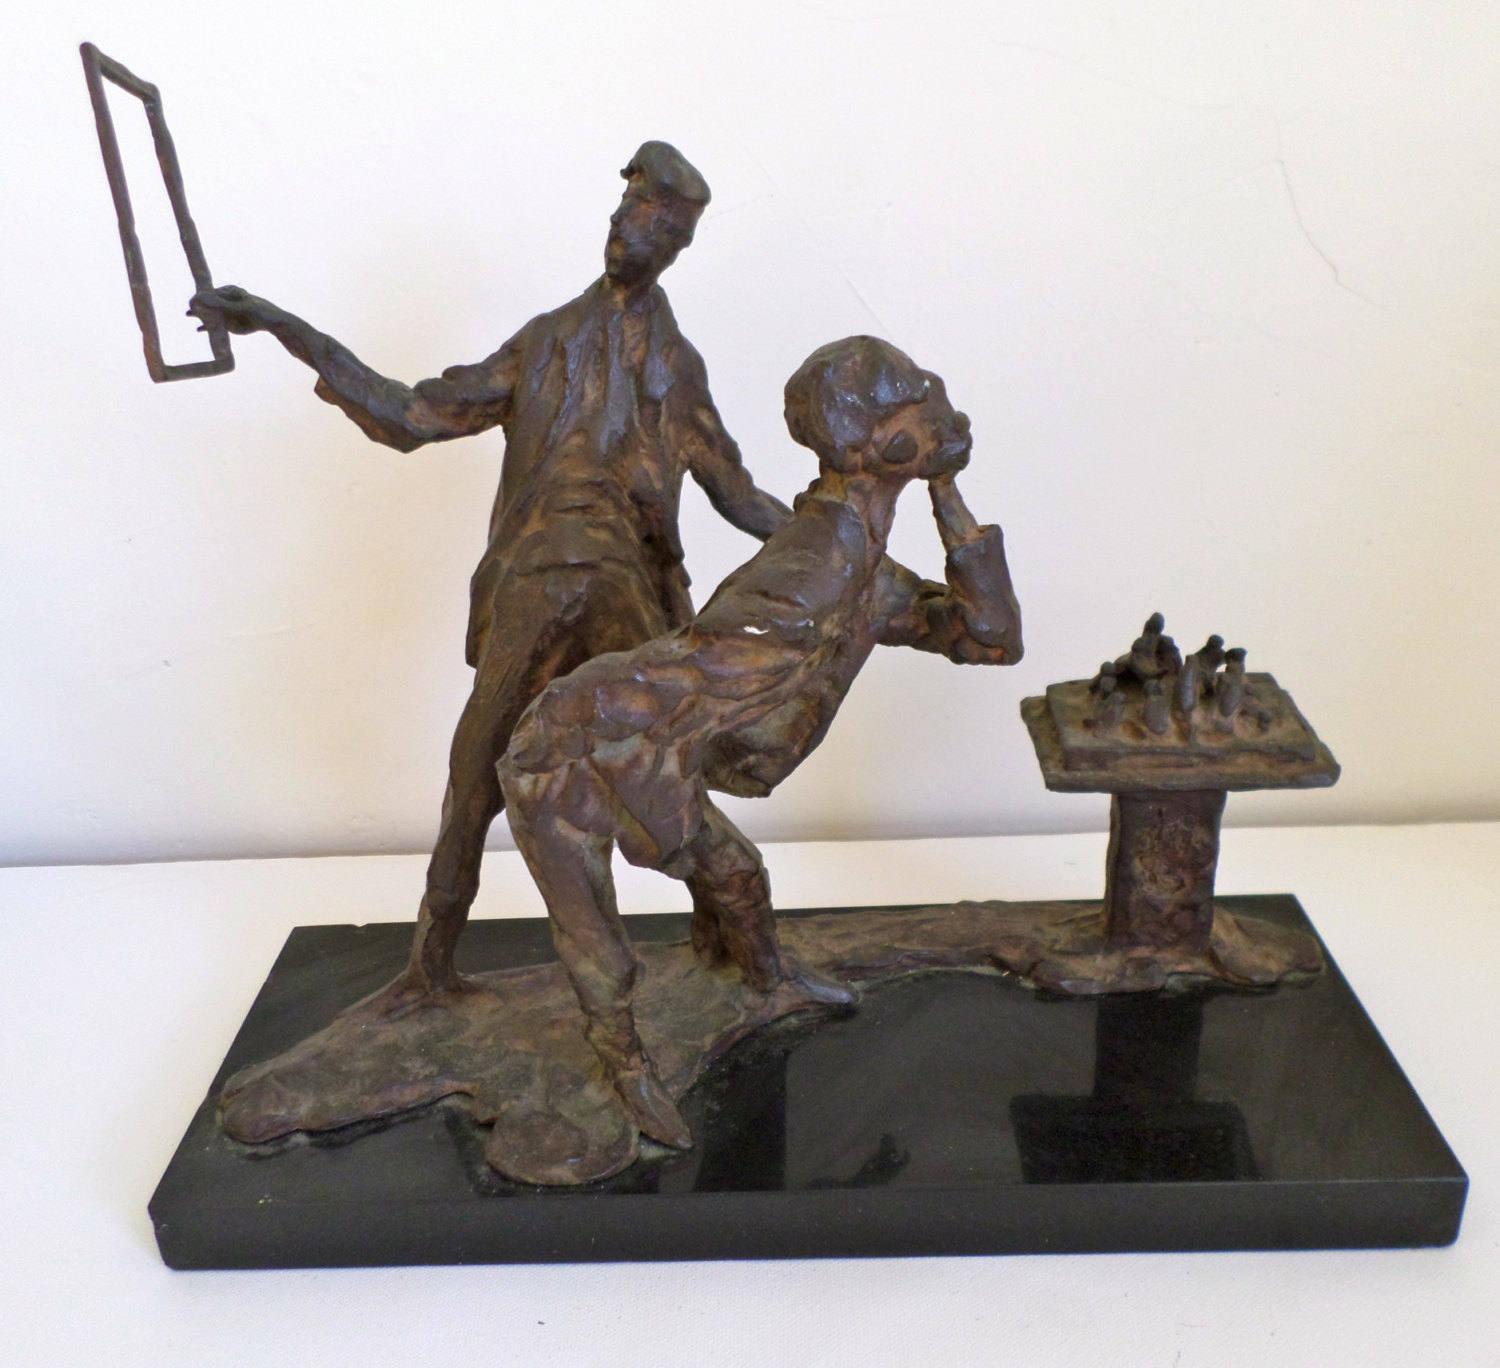 Stanley Bleifeld Figurative Sculpture - The Critic